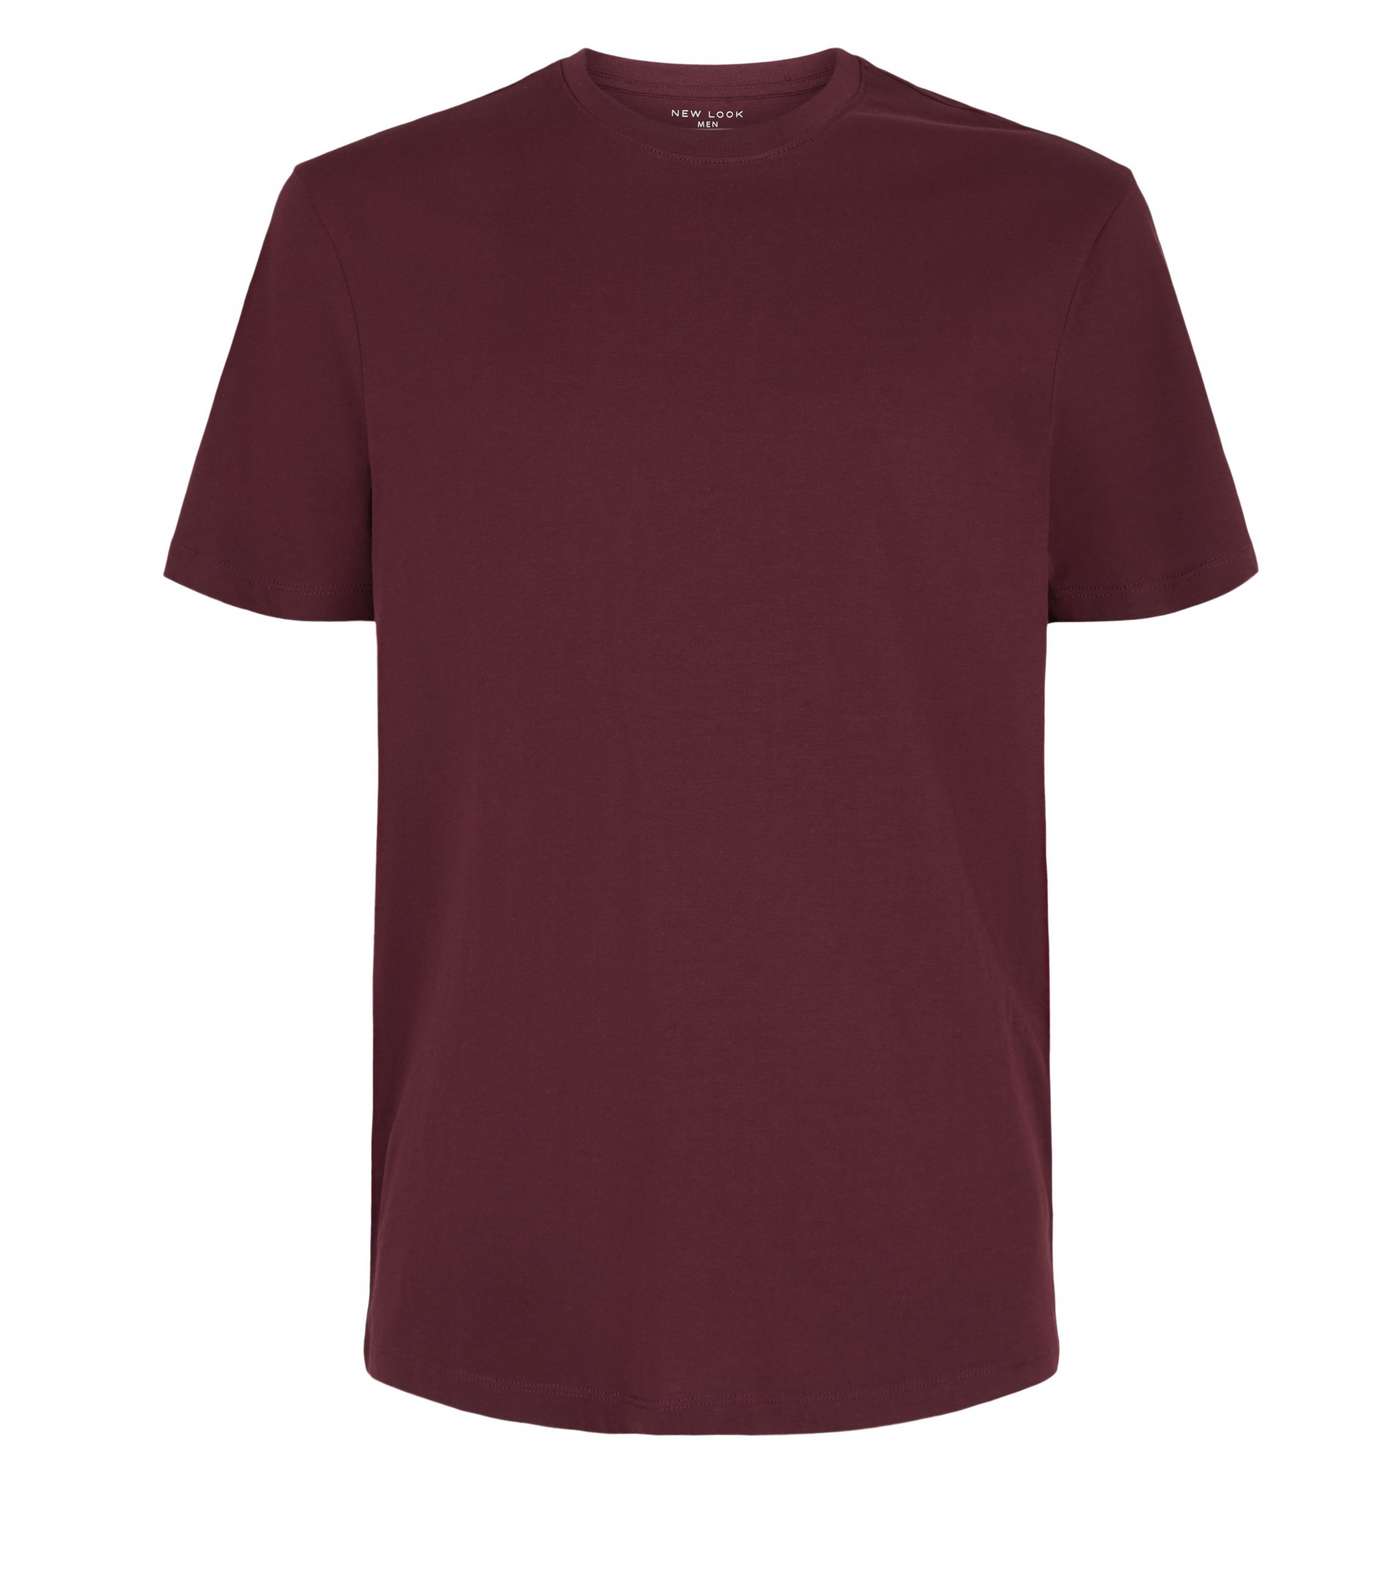 Burgundy Short Sleeve Crew T-Shirt Image 4